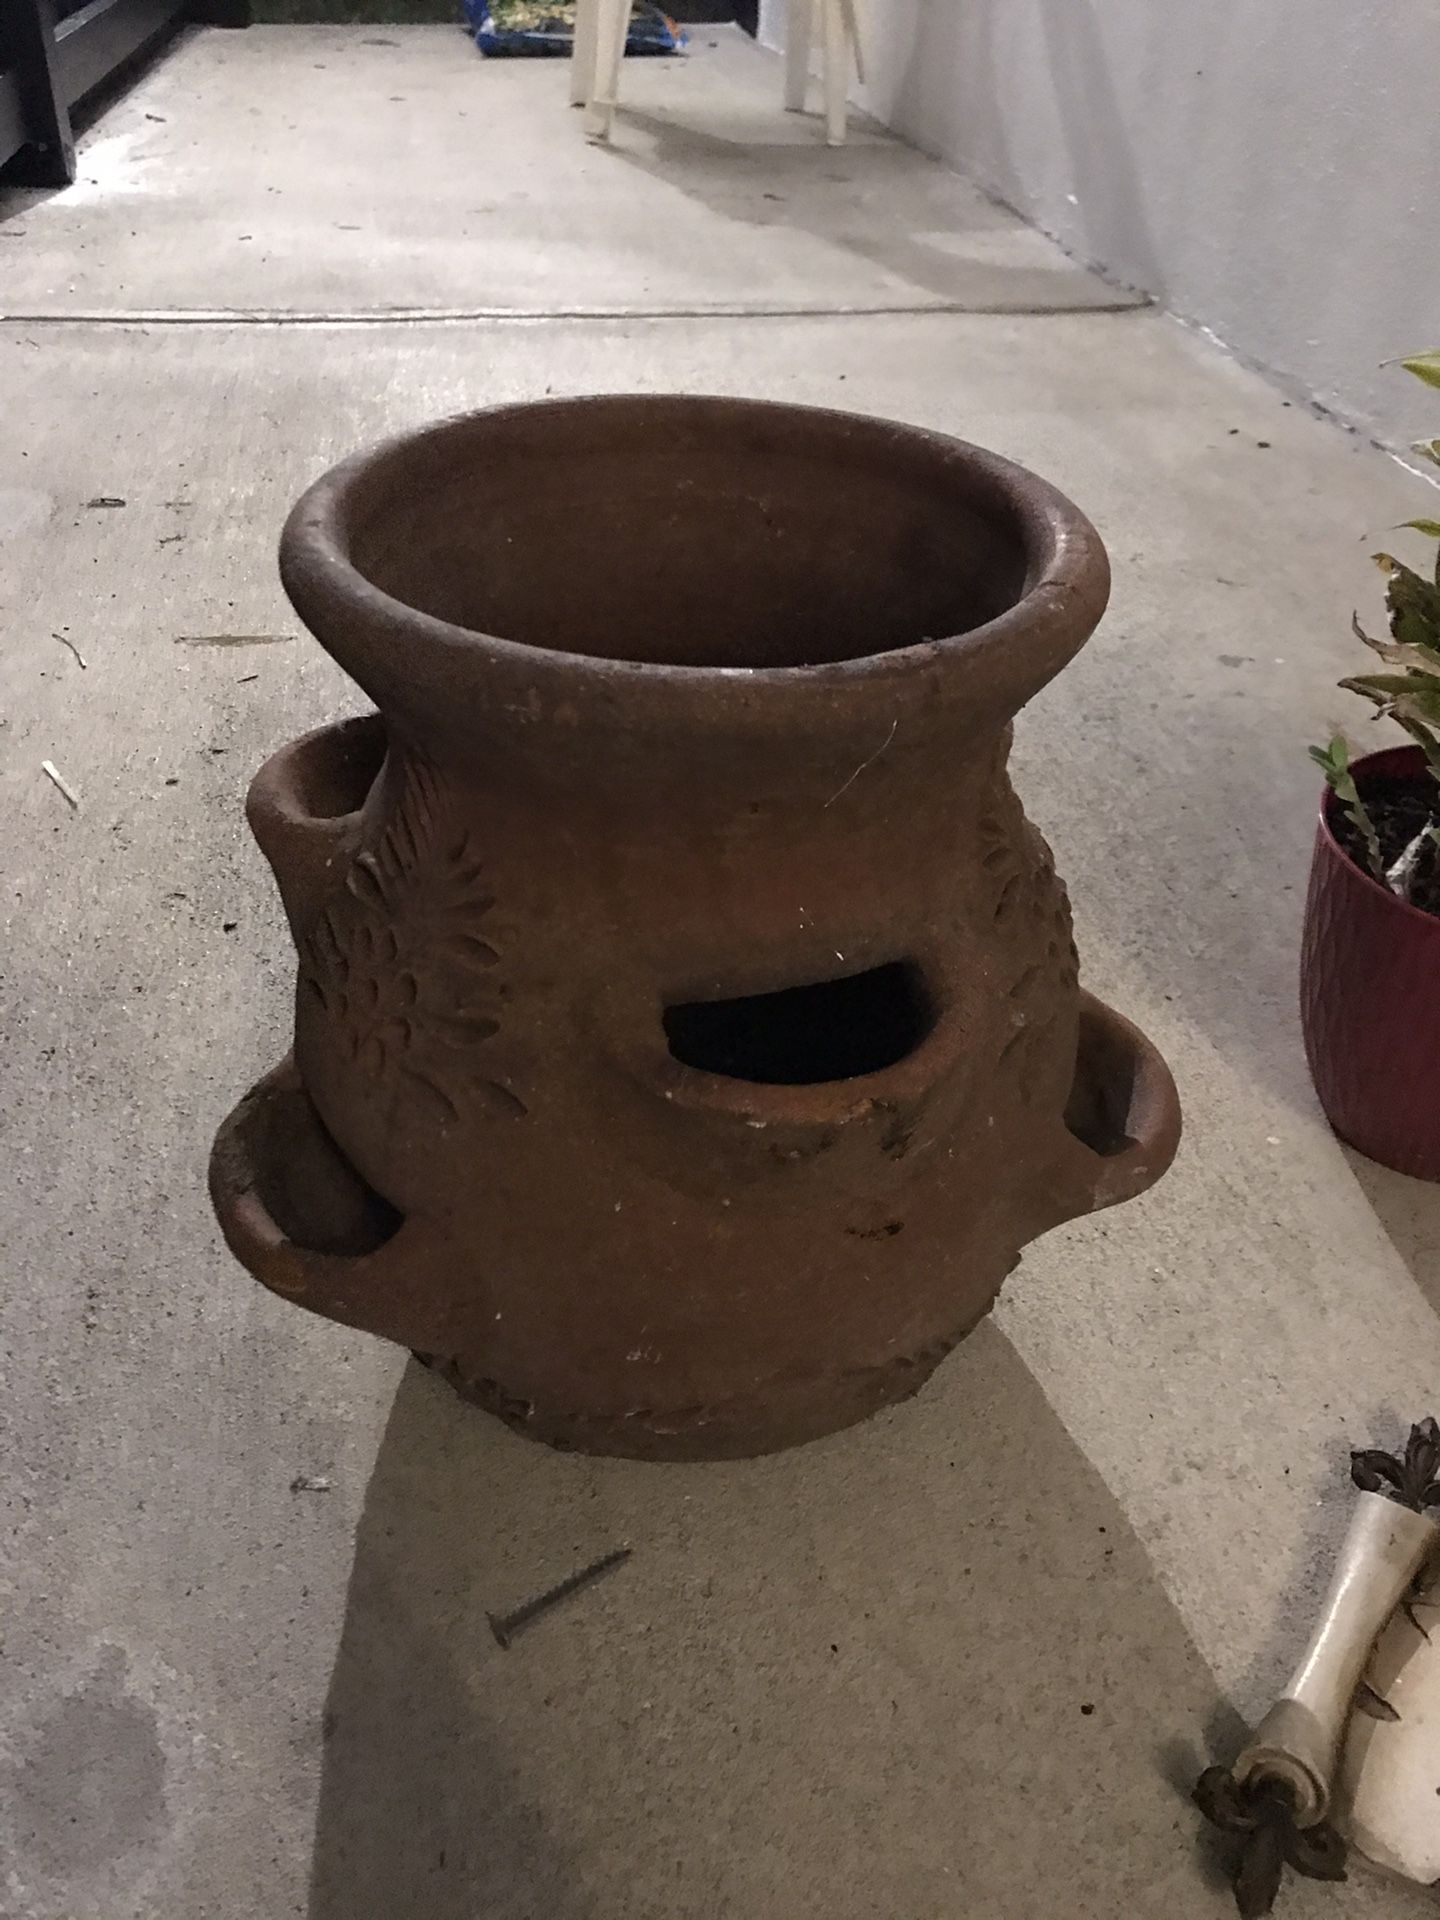 Nice garden pot